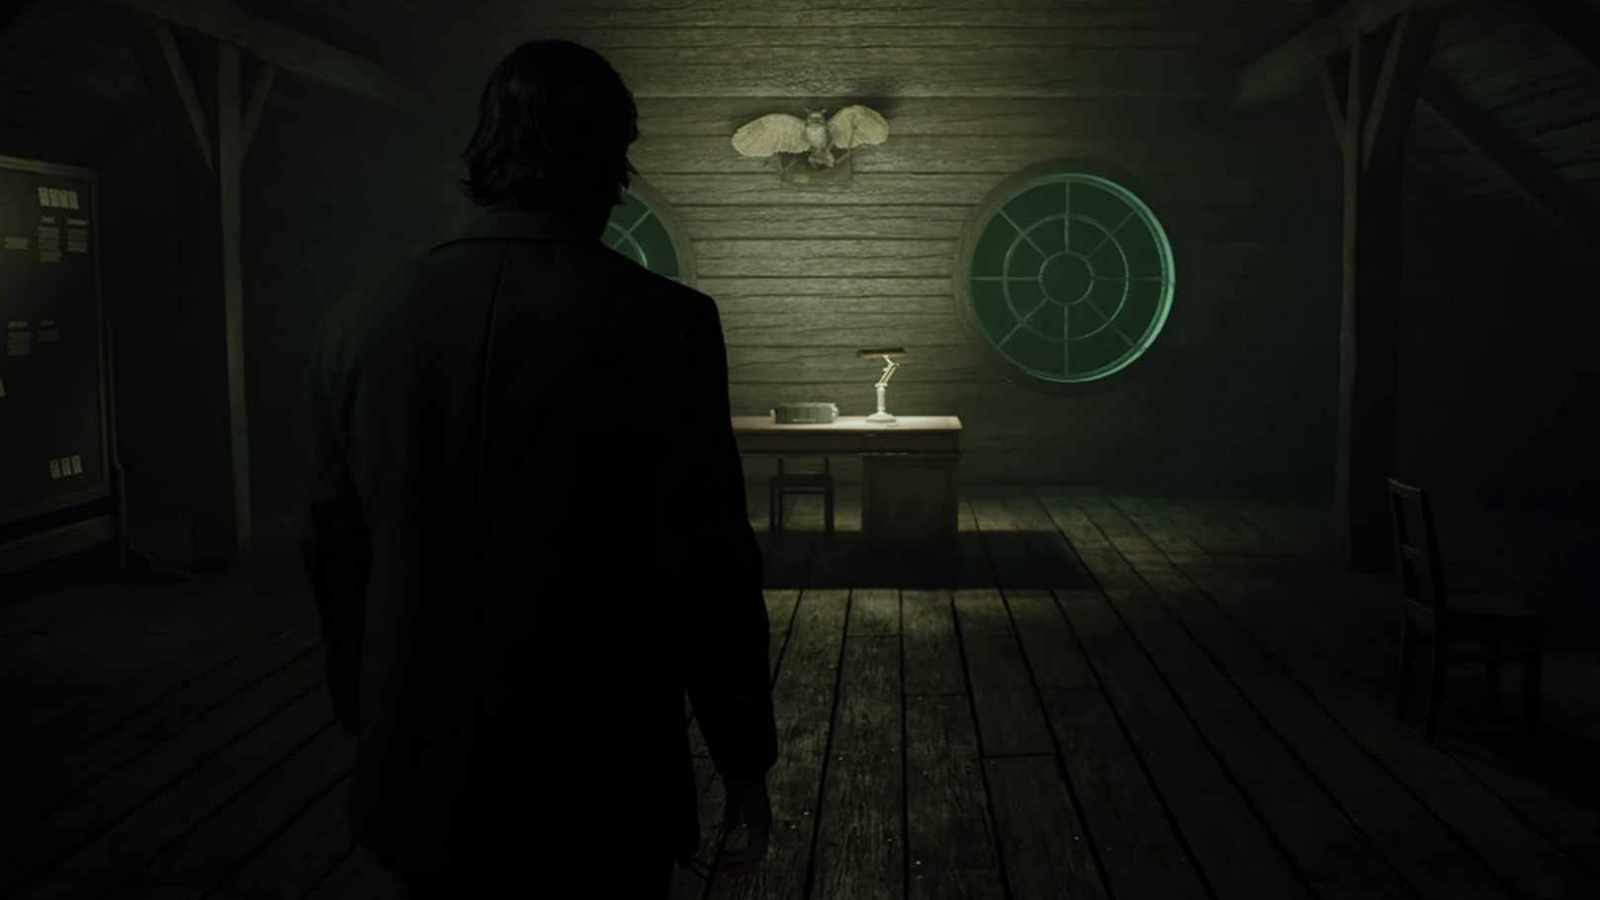 Alan Wake 2 review - incredible style, overbearing writing